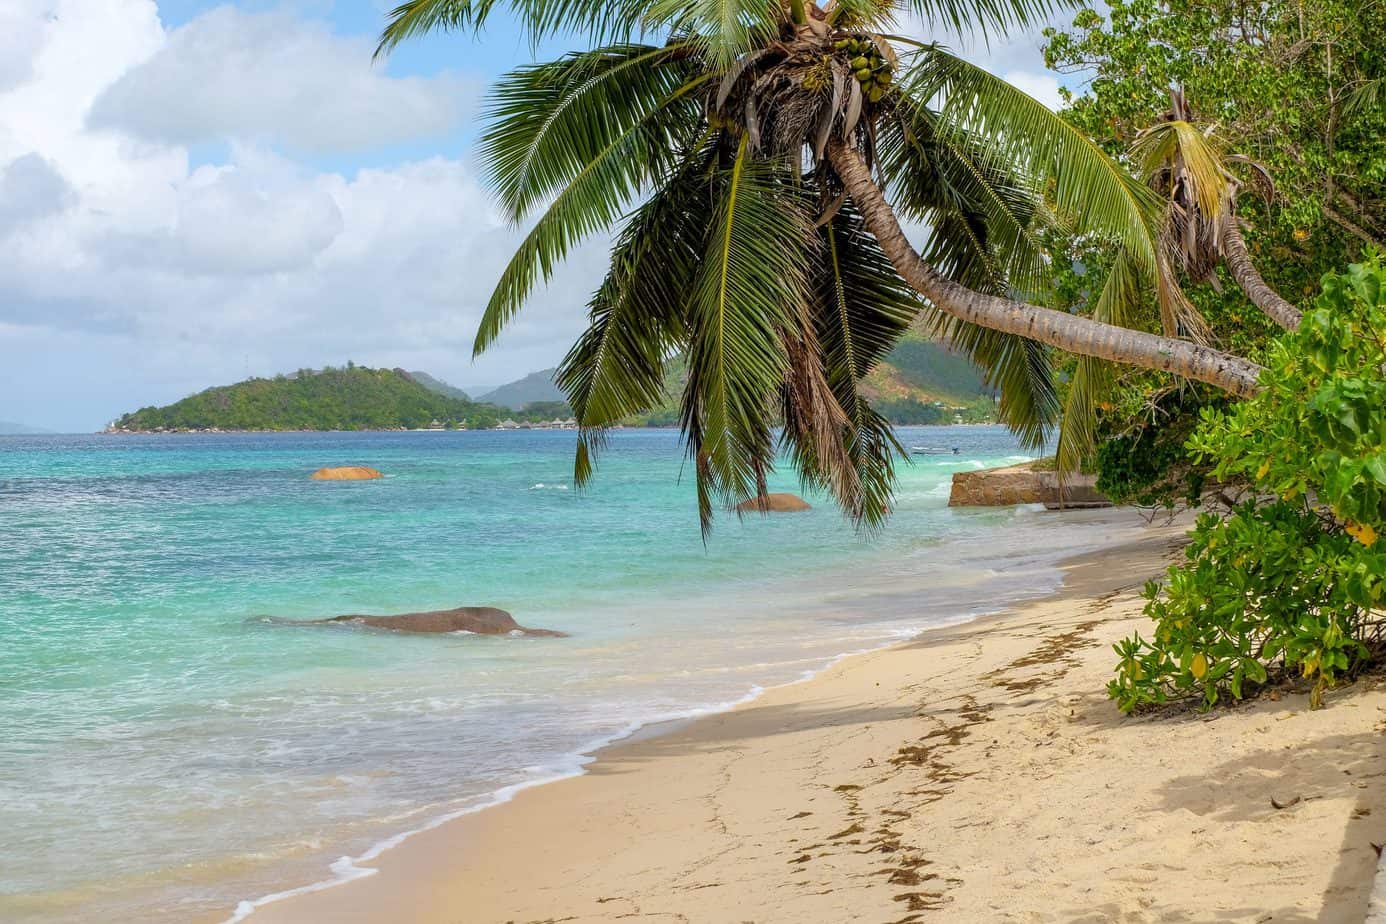 A palm tree hangs over a beach.